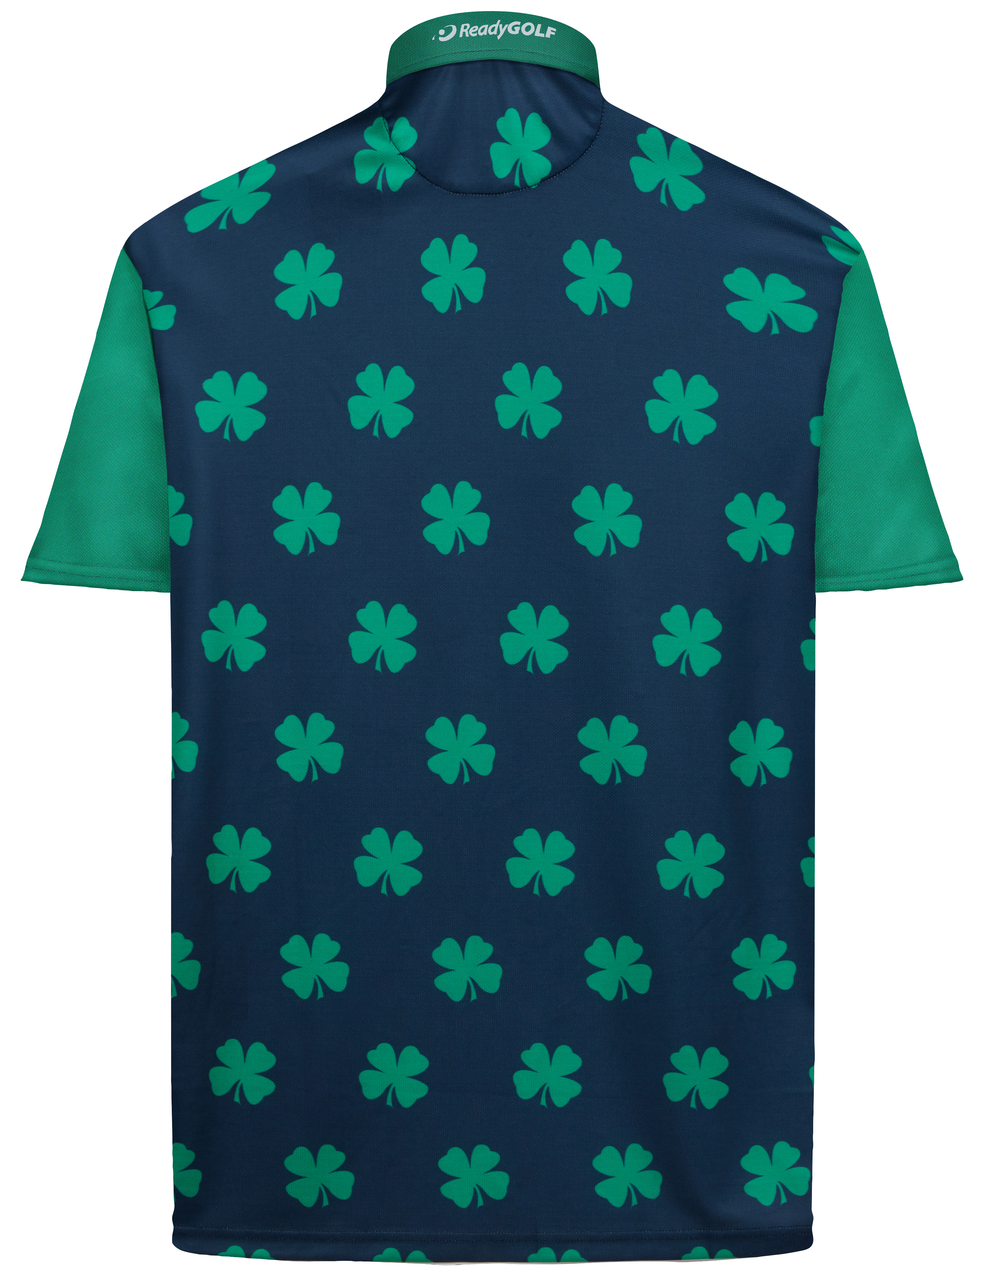 Four-Leaf Clover Mens Golf Polo Shirt - Navy-Green by ReadyGOLF